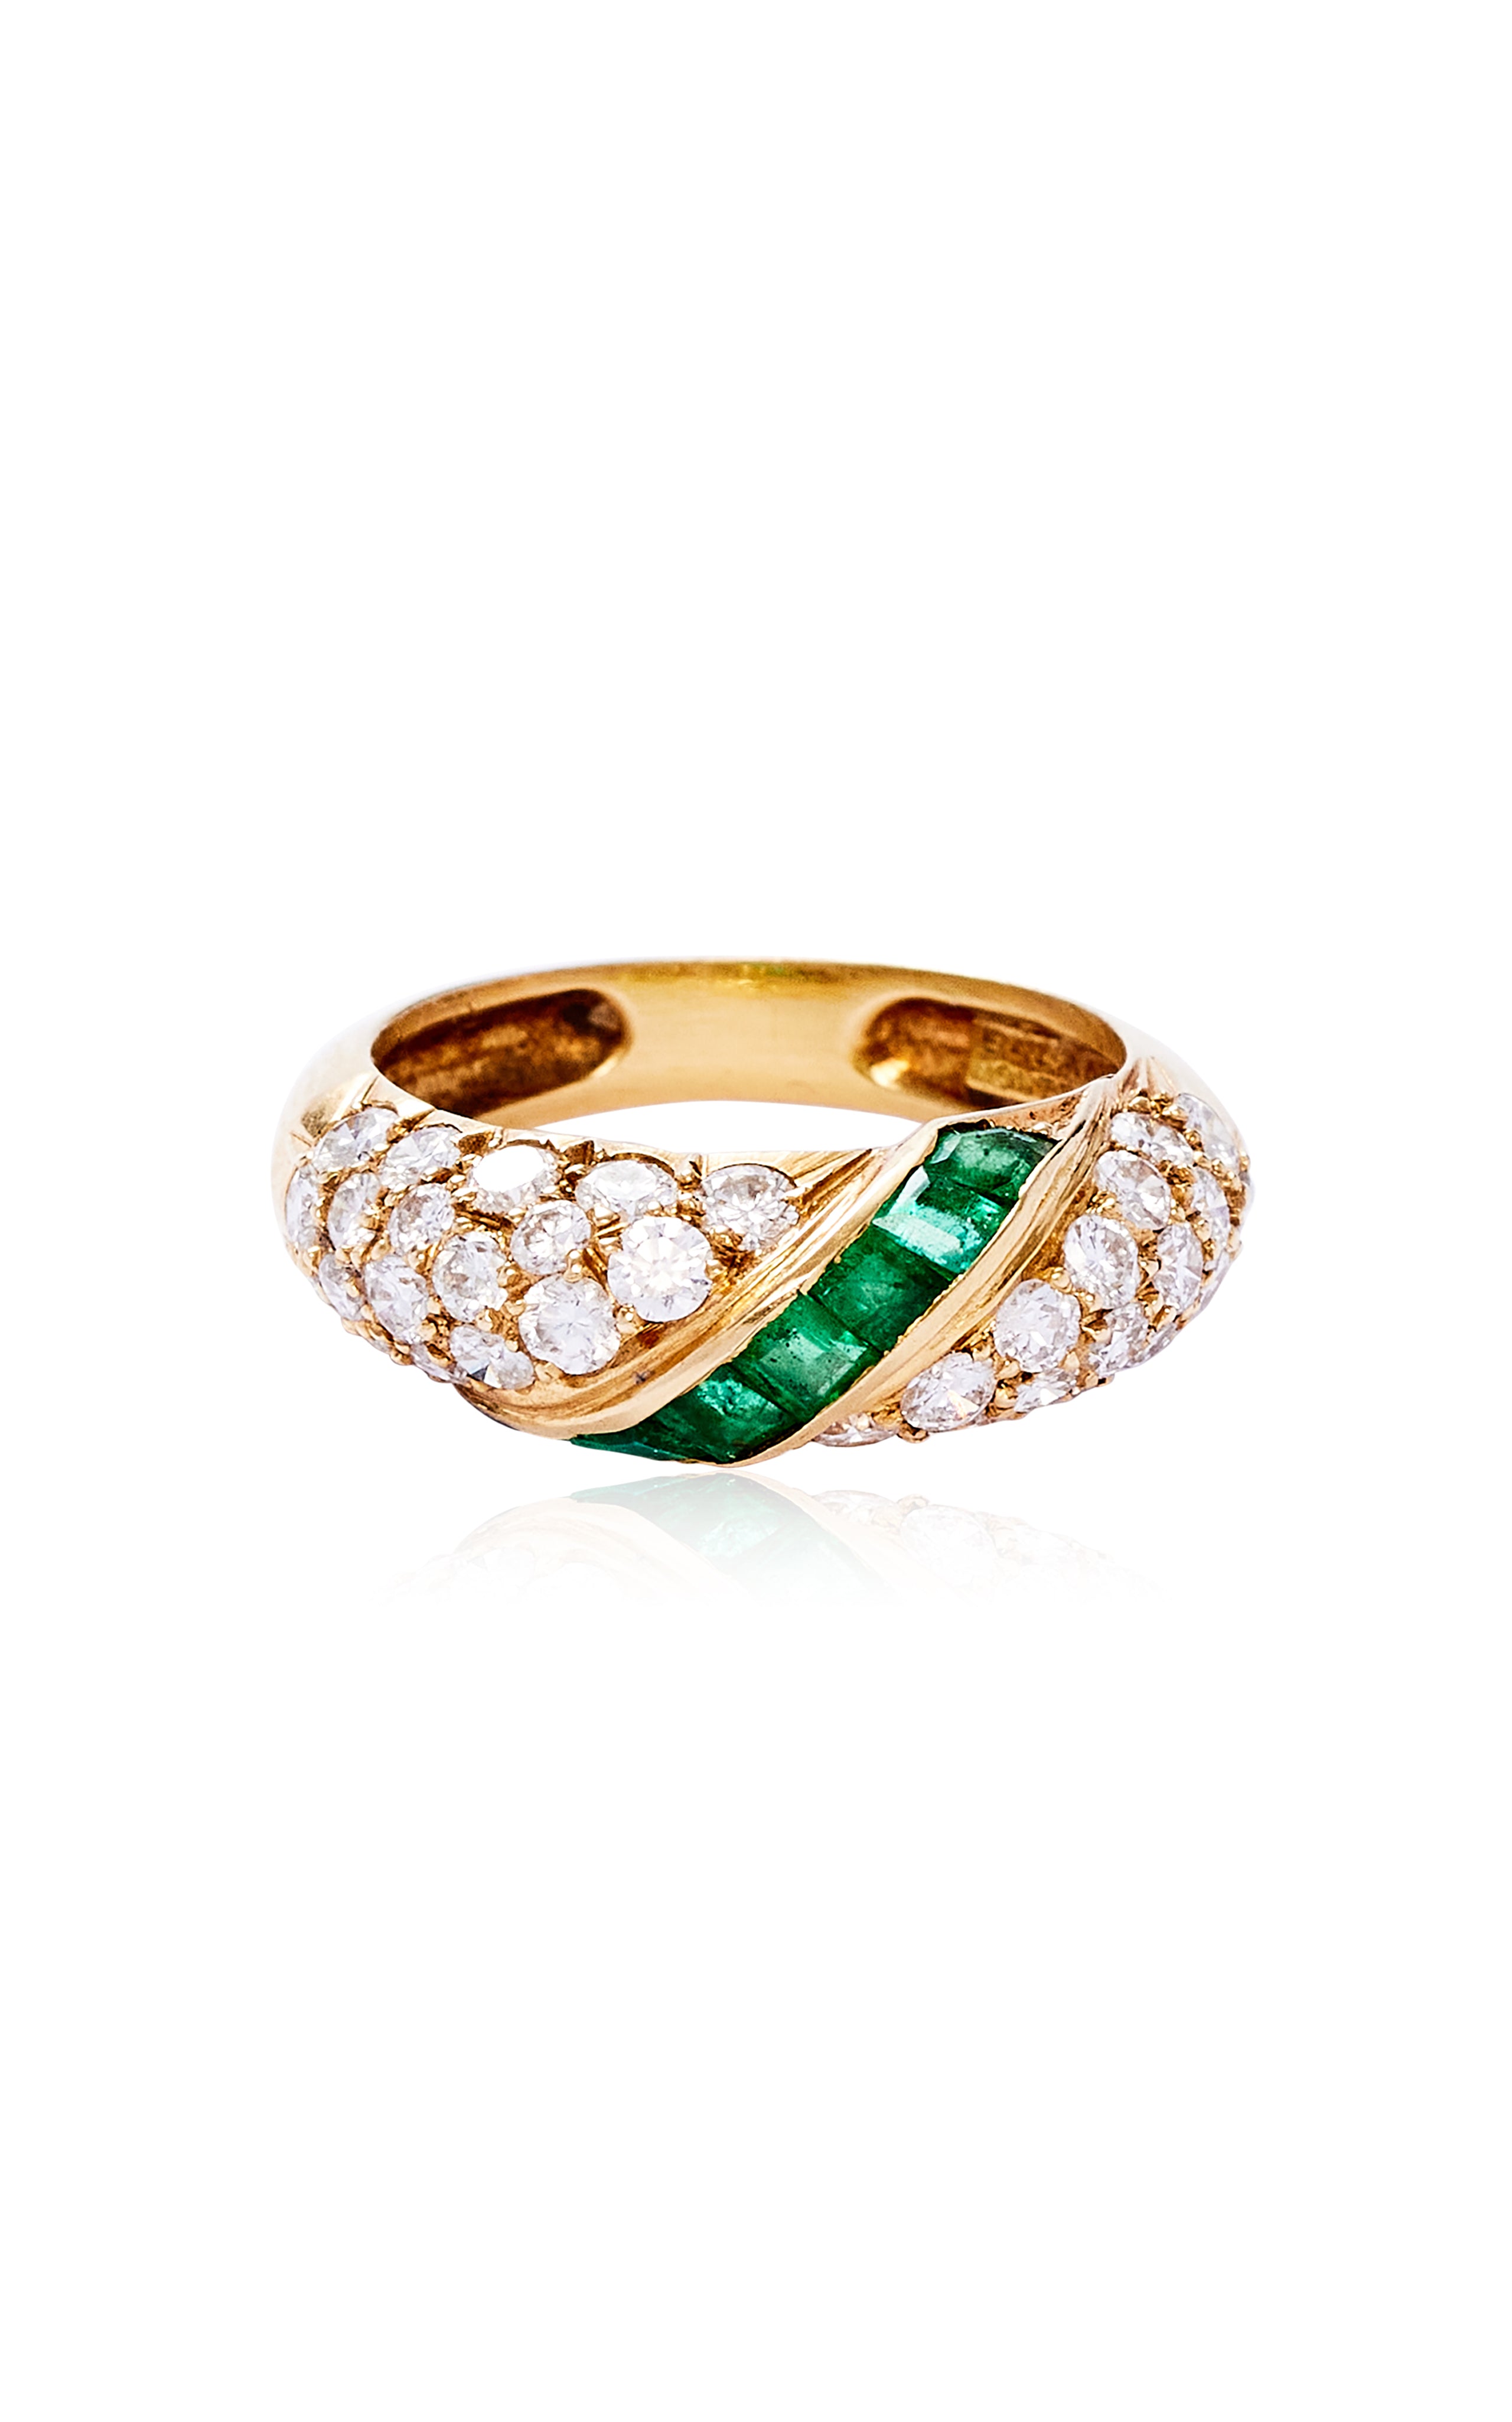 Vintage French Diamond & Emerald Ring